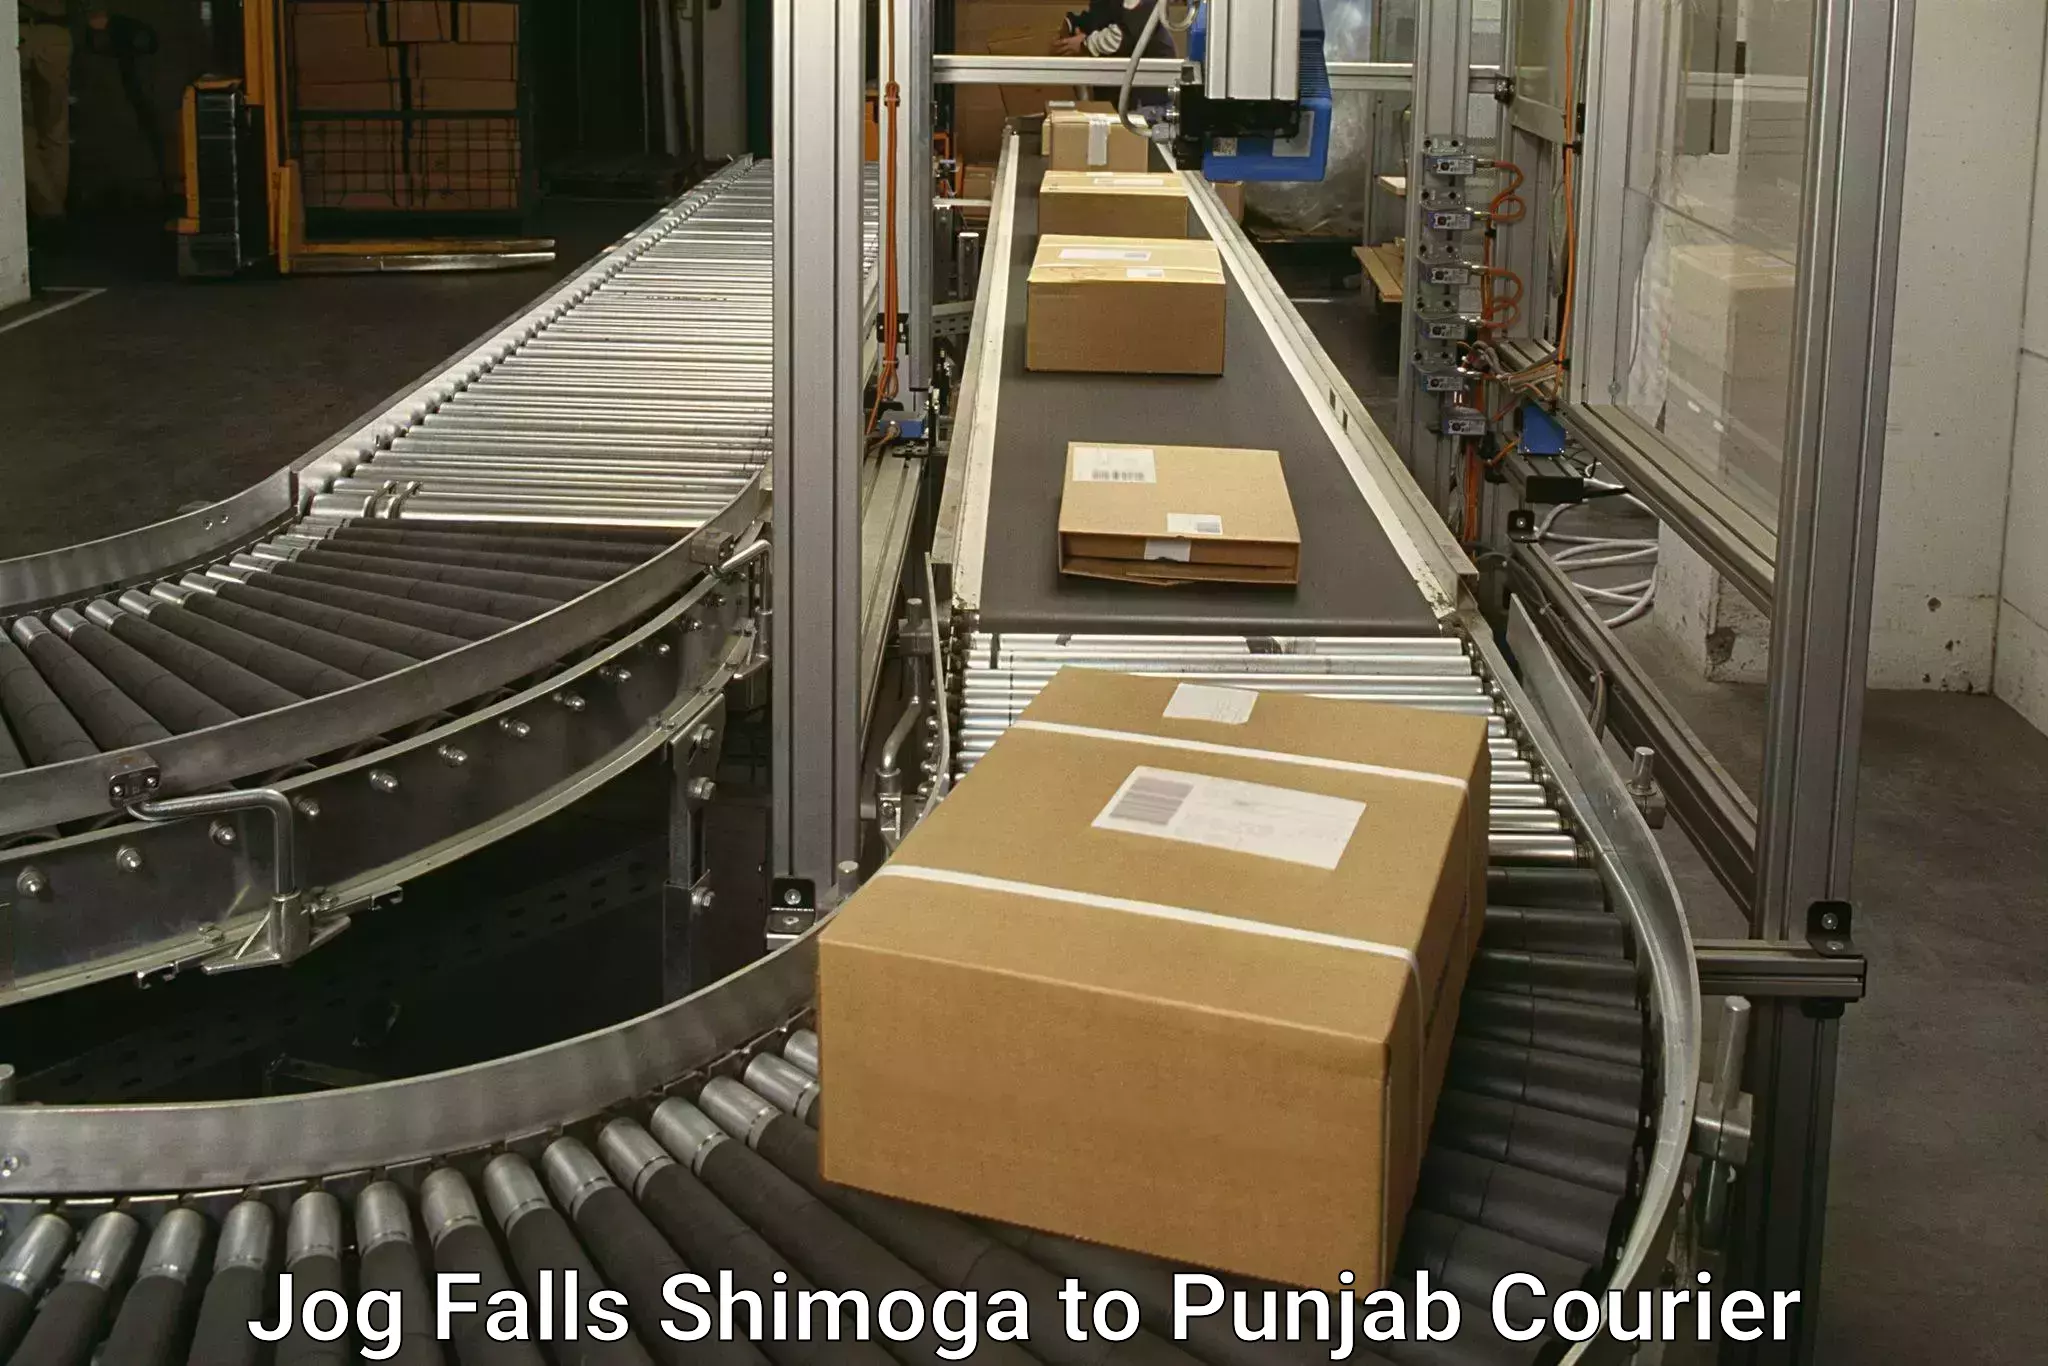 Express delivery capabilities Jog Falls Shimoga to Punjab